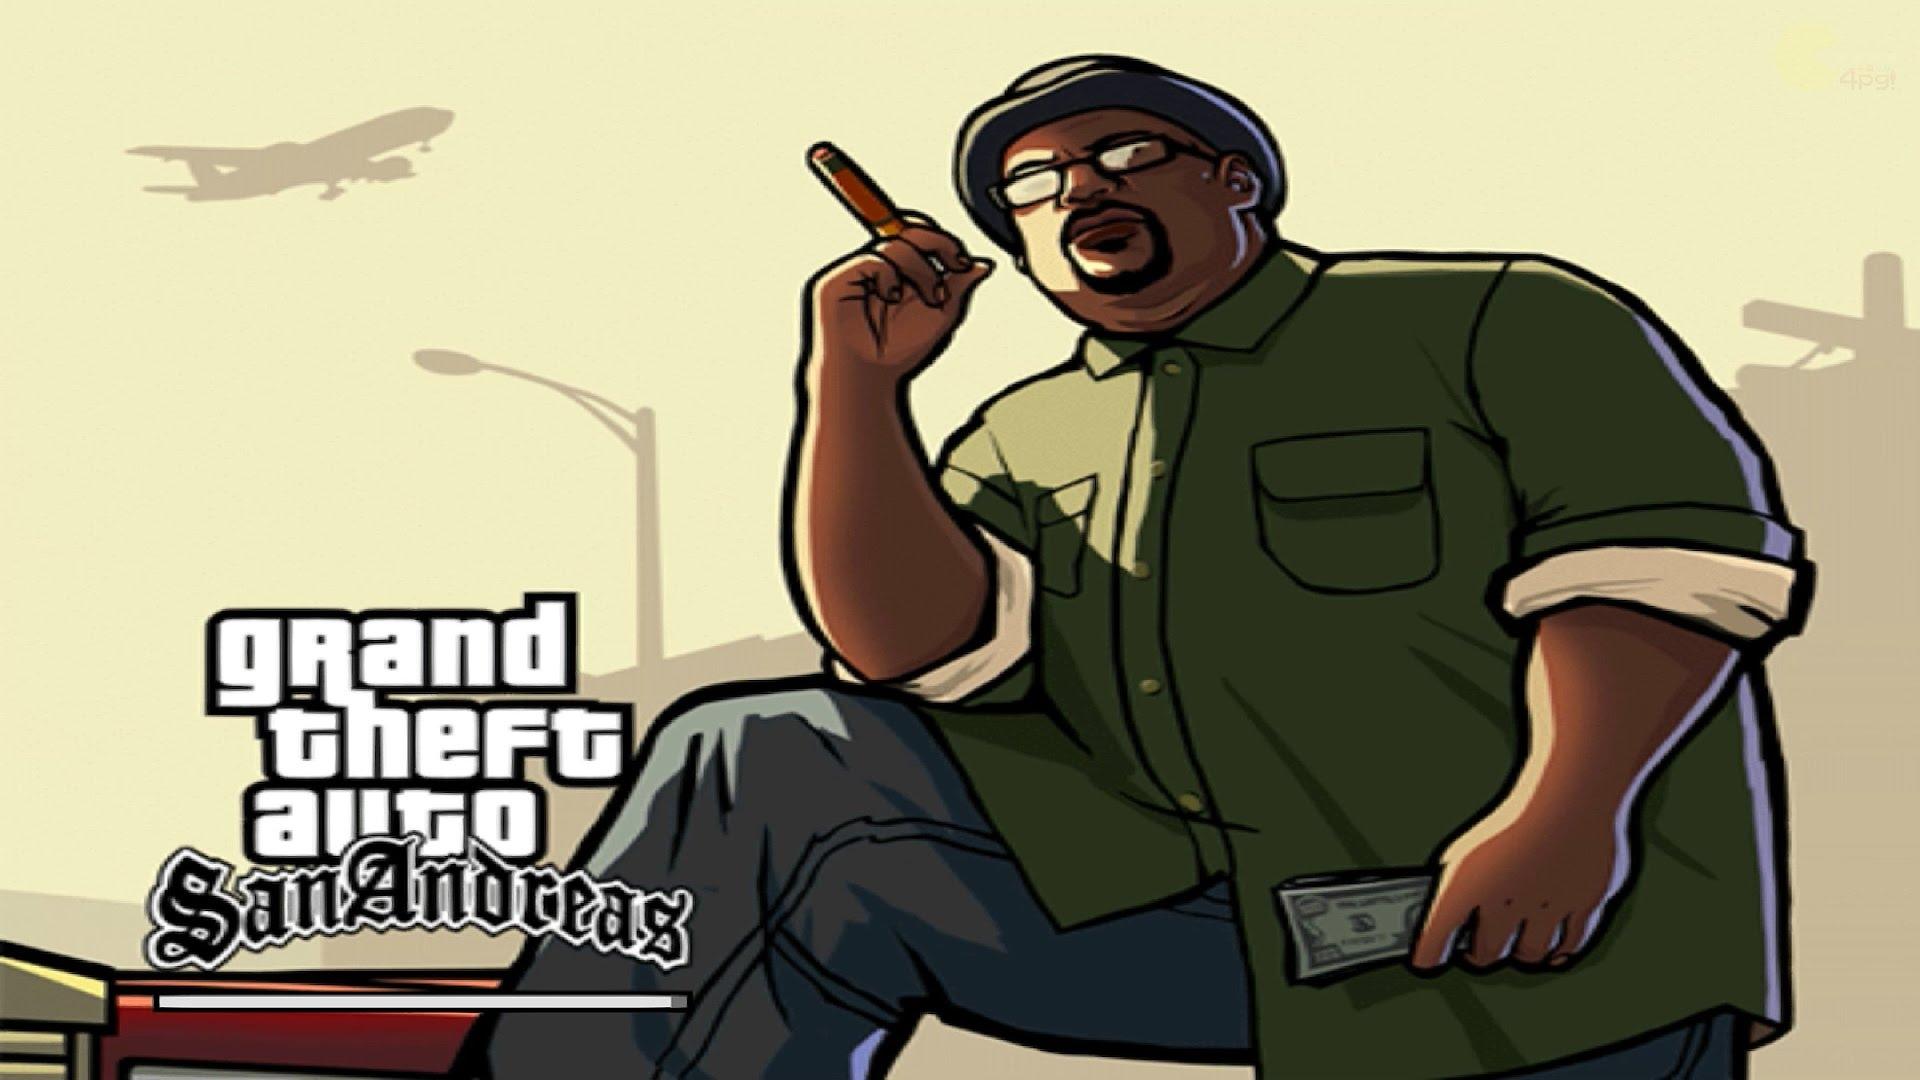 Grand Theft Auto San Andreas Wallpaper, Picture